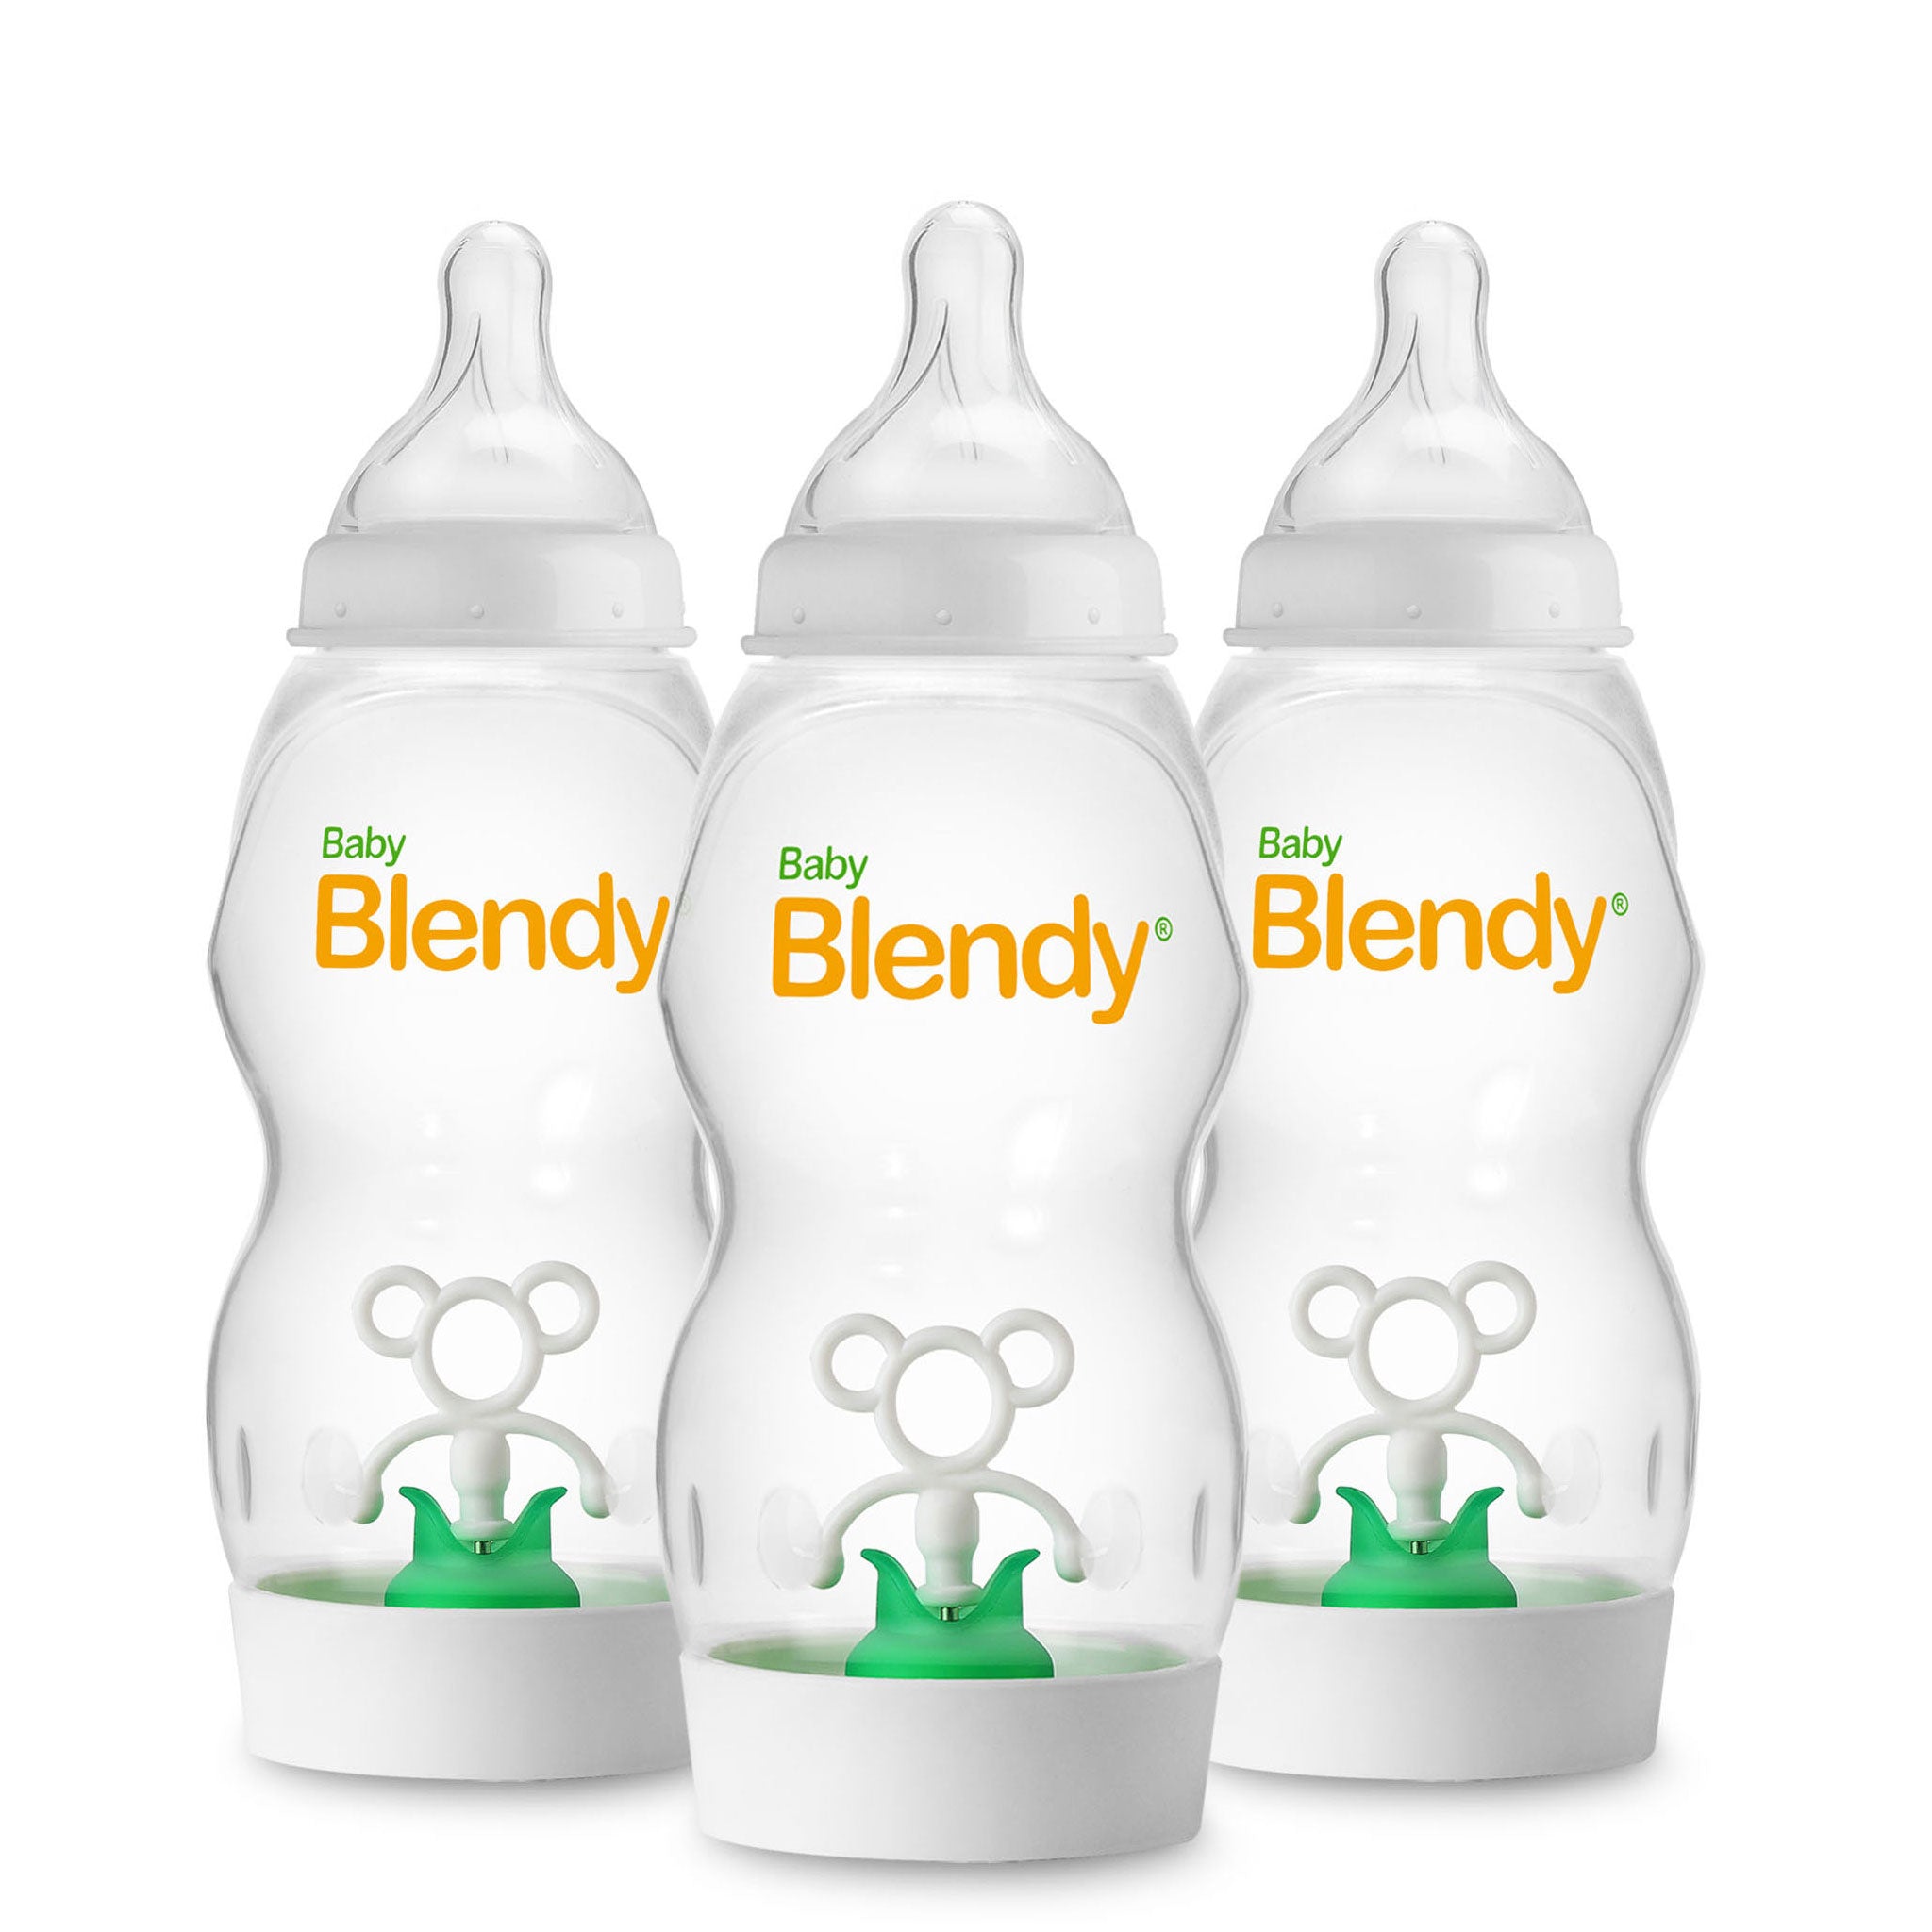 Blender Bottle - shop – Baby Booster Prenatal Protein Supplements